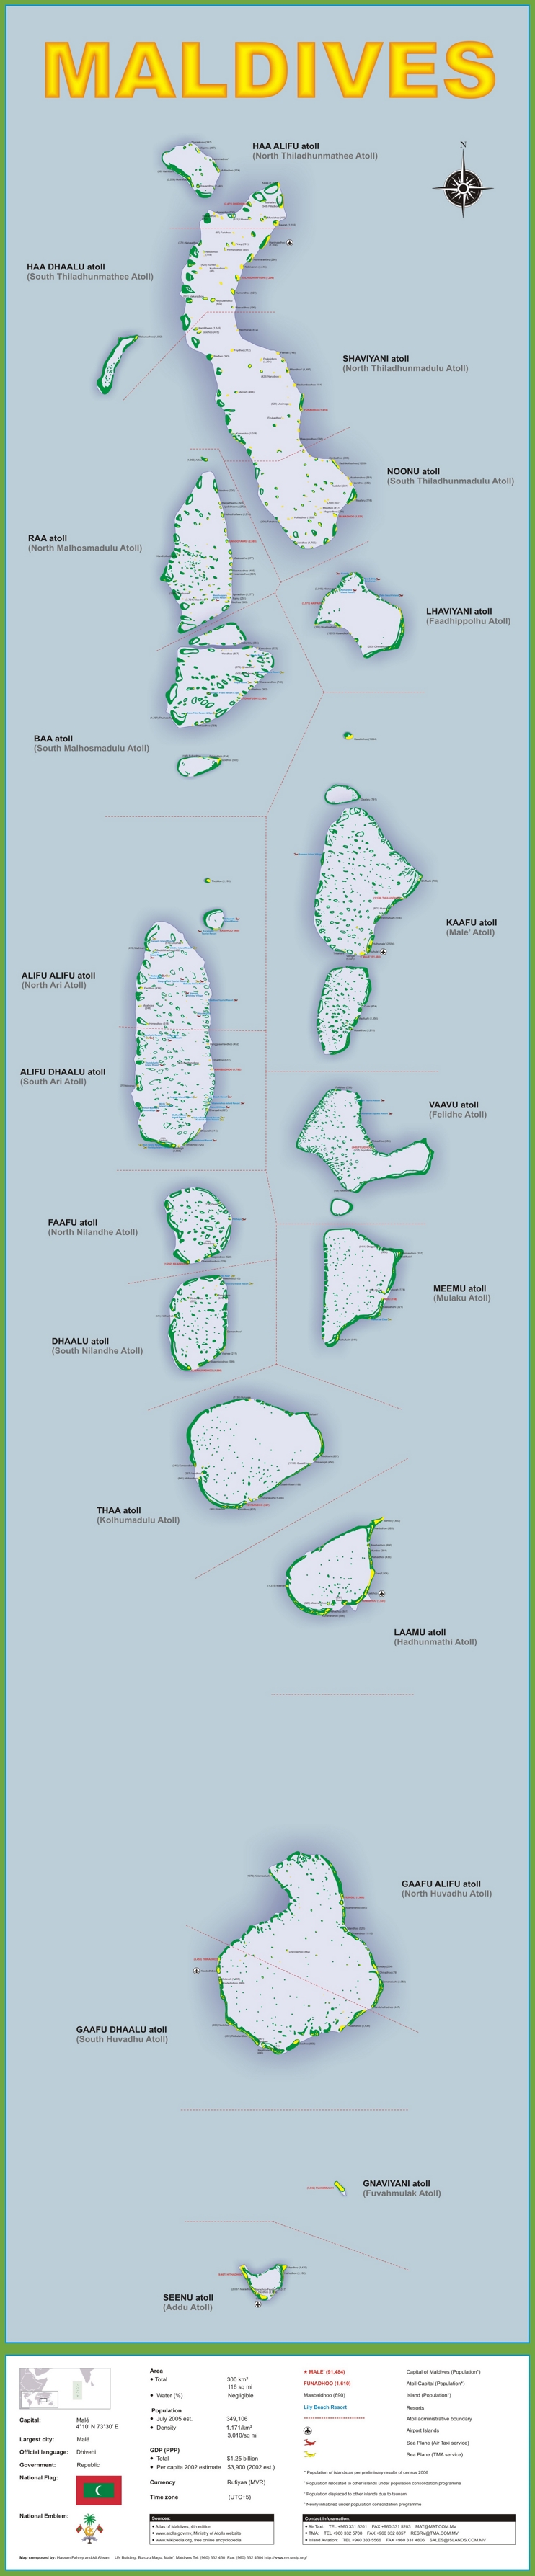 Large detailed Maldives islands map